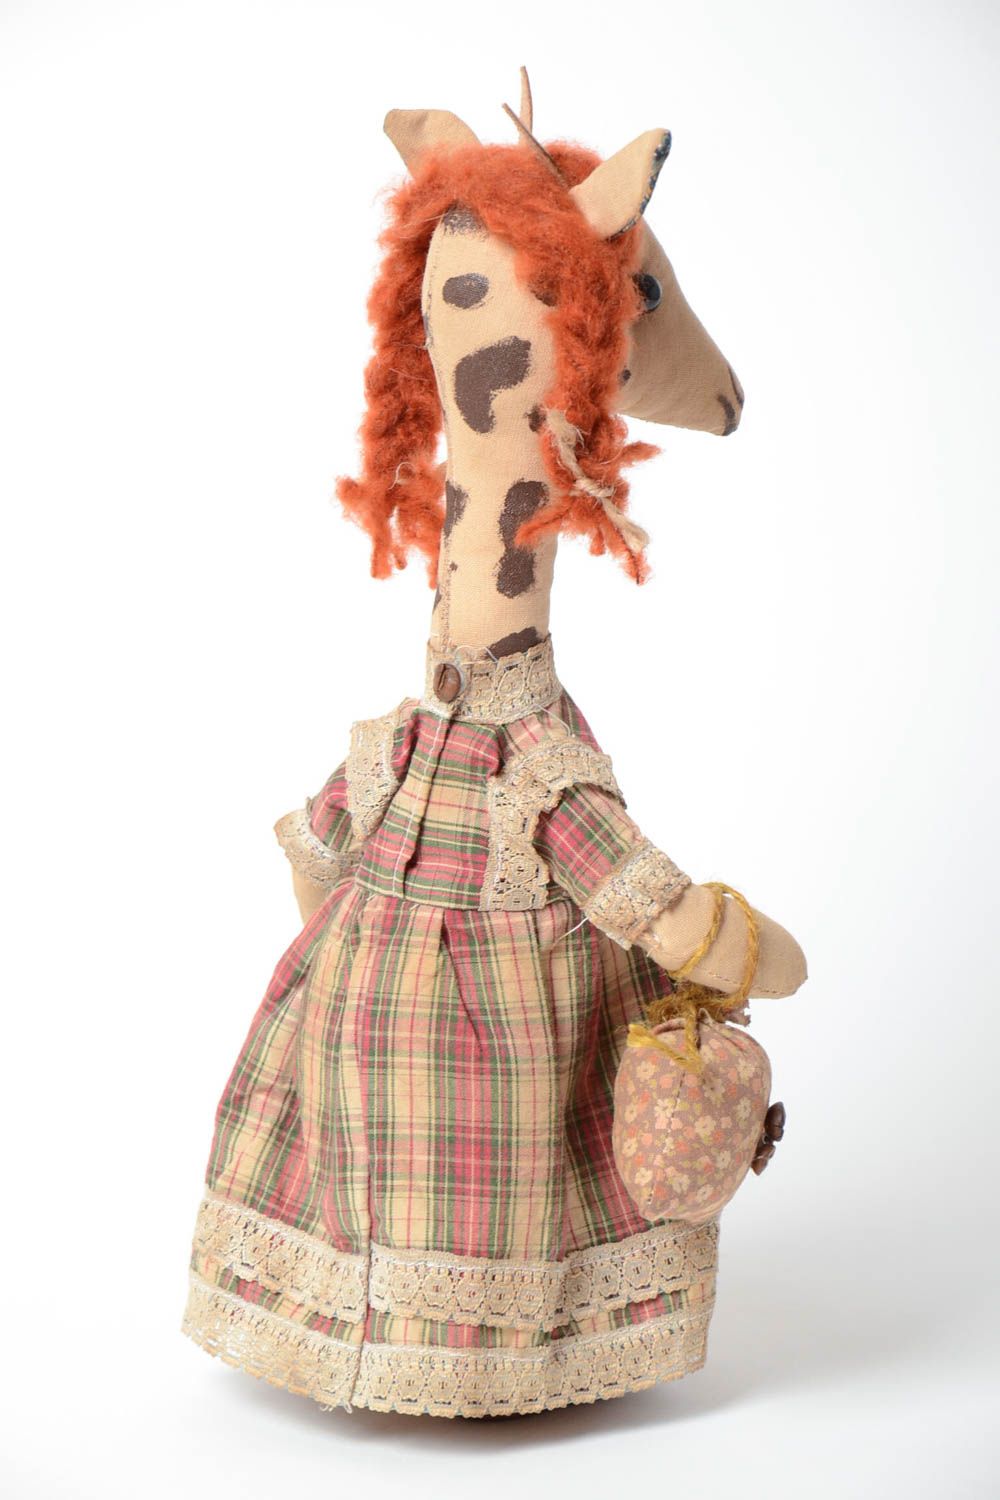 Handmade fabric soft toy giraffe with coffee and vanilla aroma interior doll photo 4